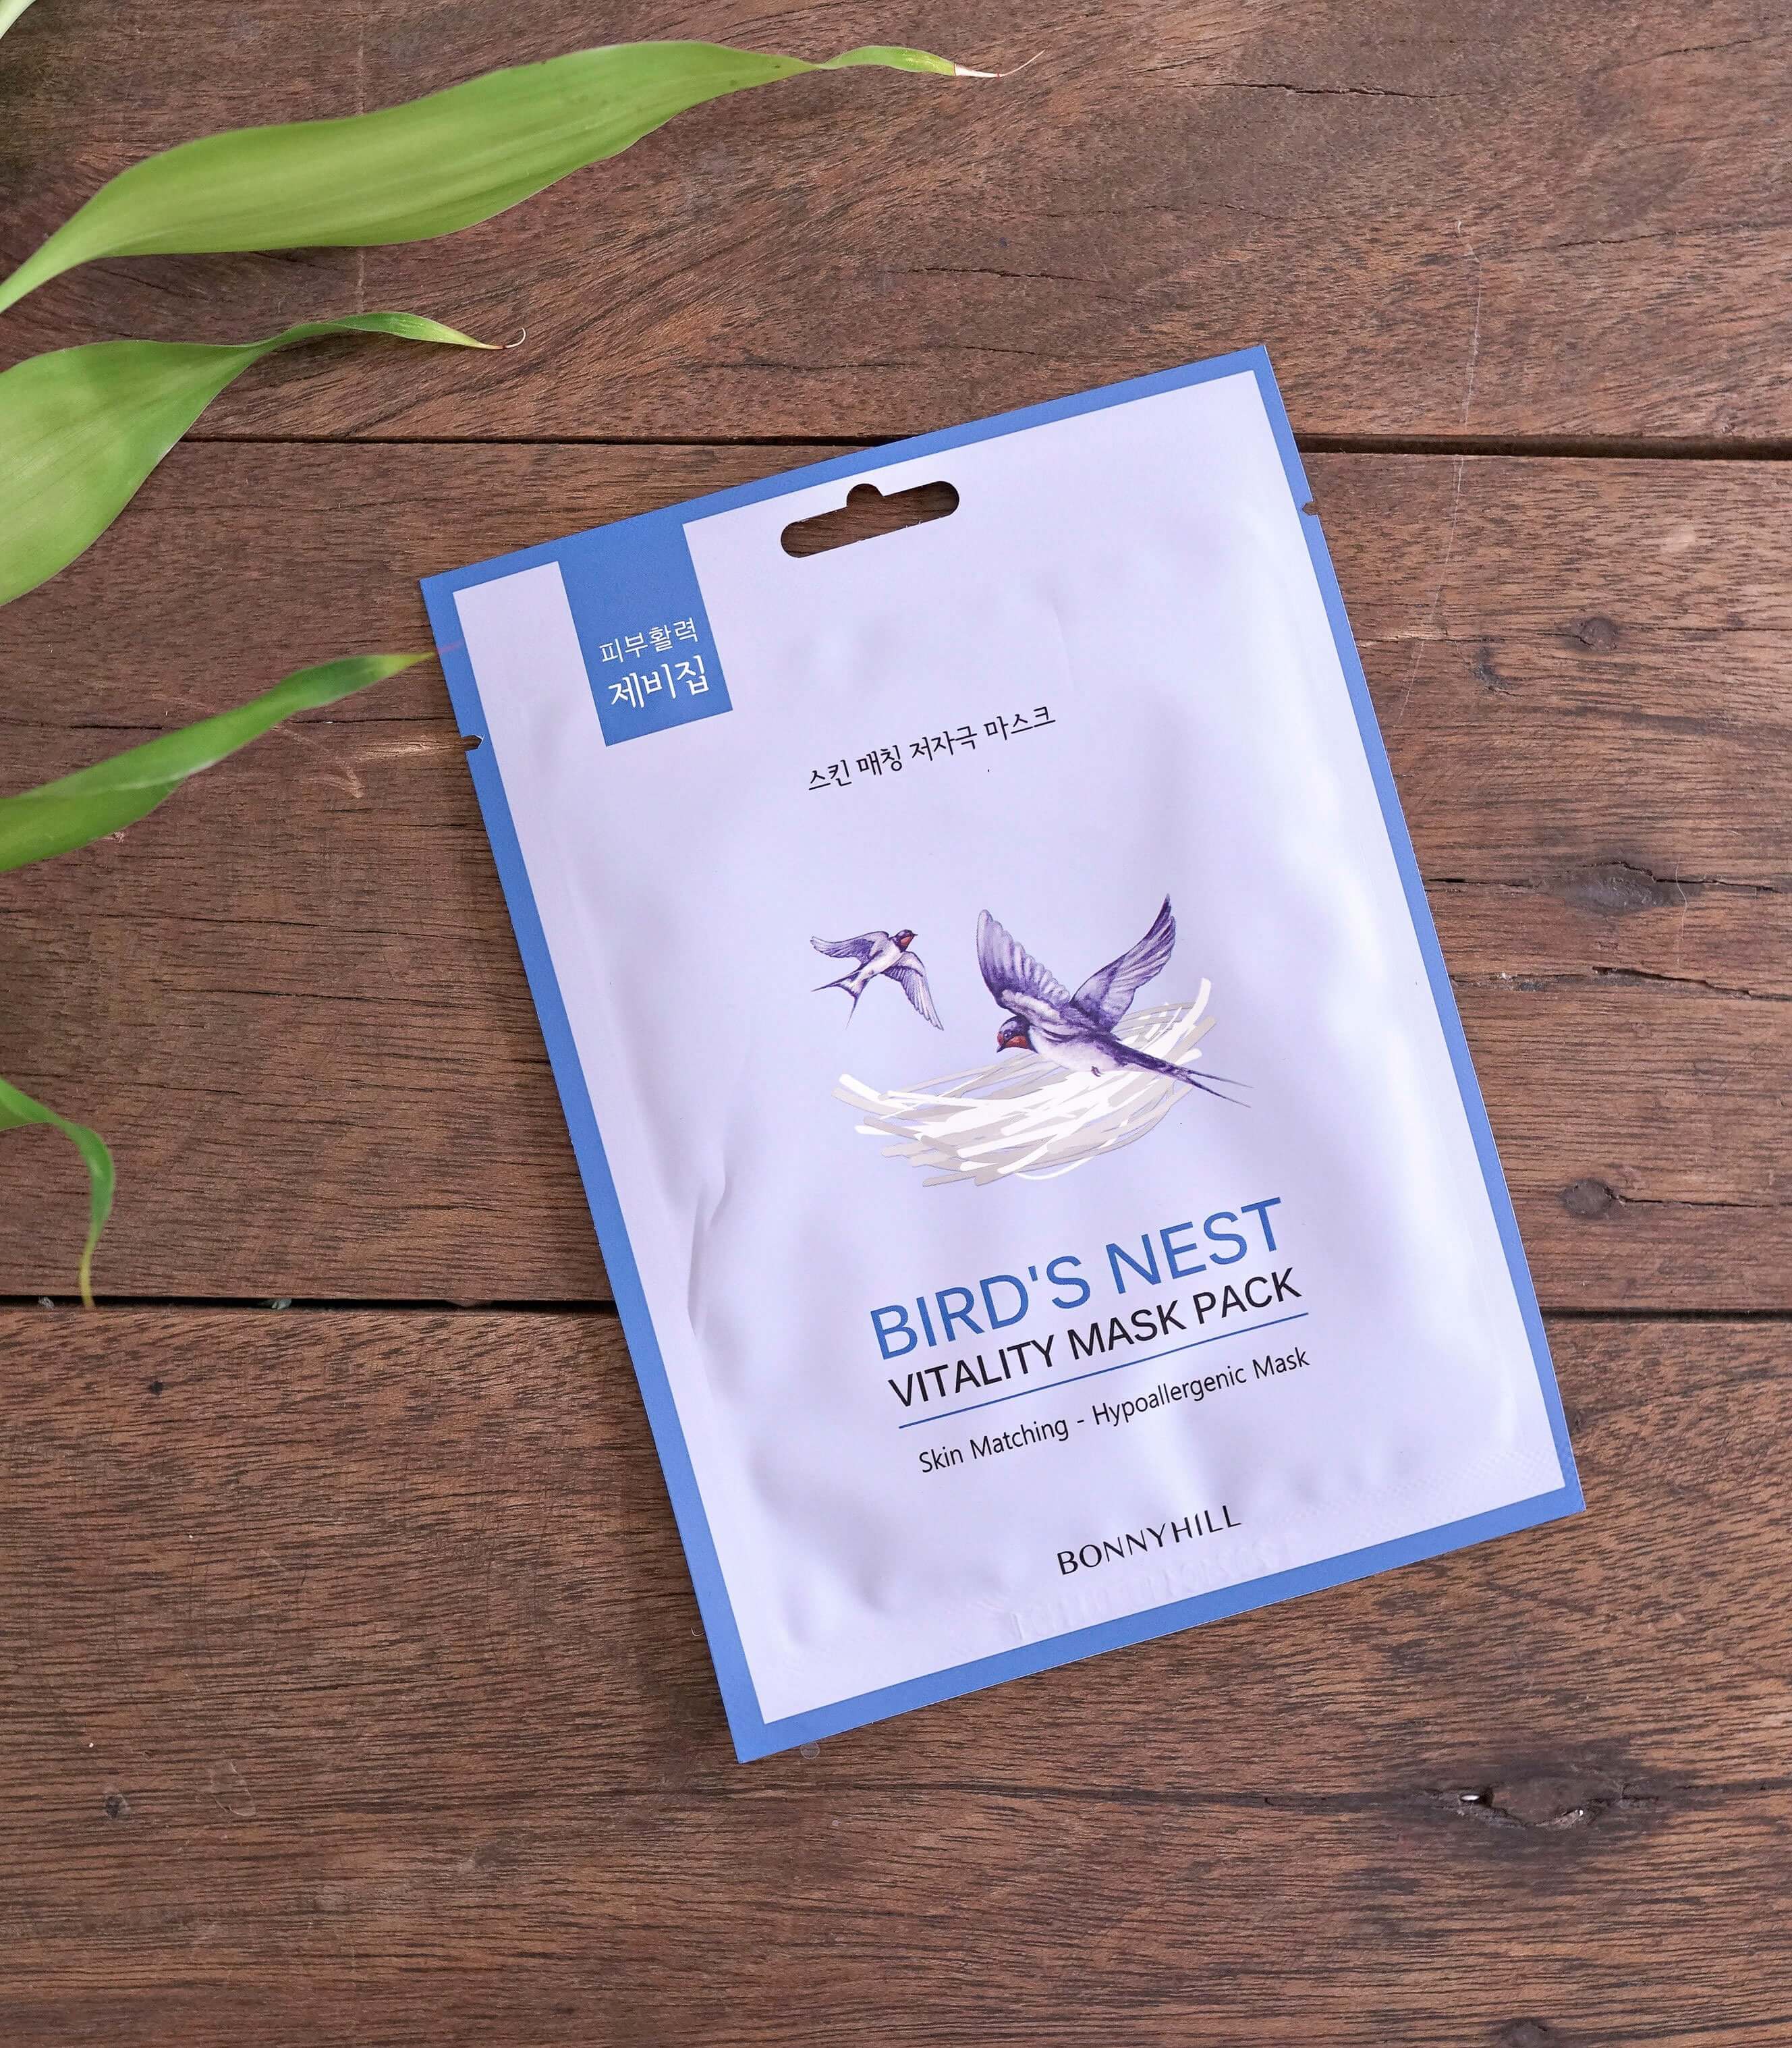 BONNYHILL,Bird's Nest Vitality Mask Pack  ,มาส์กBONNYHILL,Bird's Nest Vitality Mask Pack  รีวิว,Bird's Nest Vitality Mask Pack  ราคา.บอนนี่ฮีล